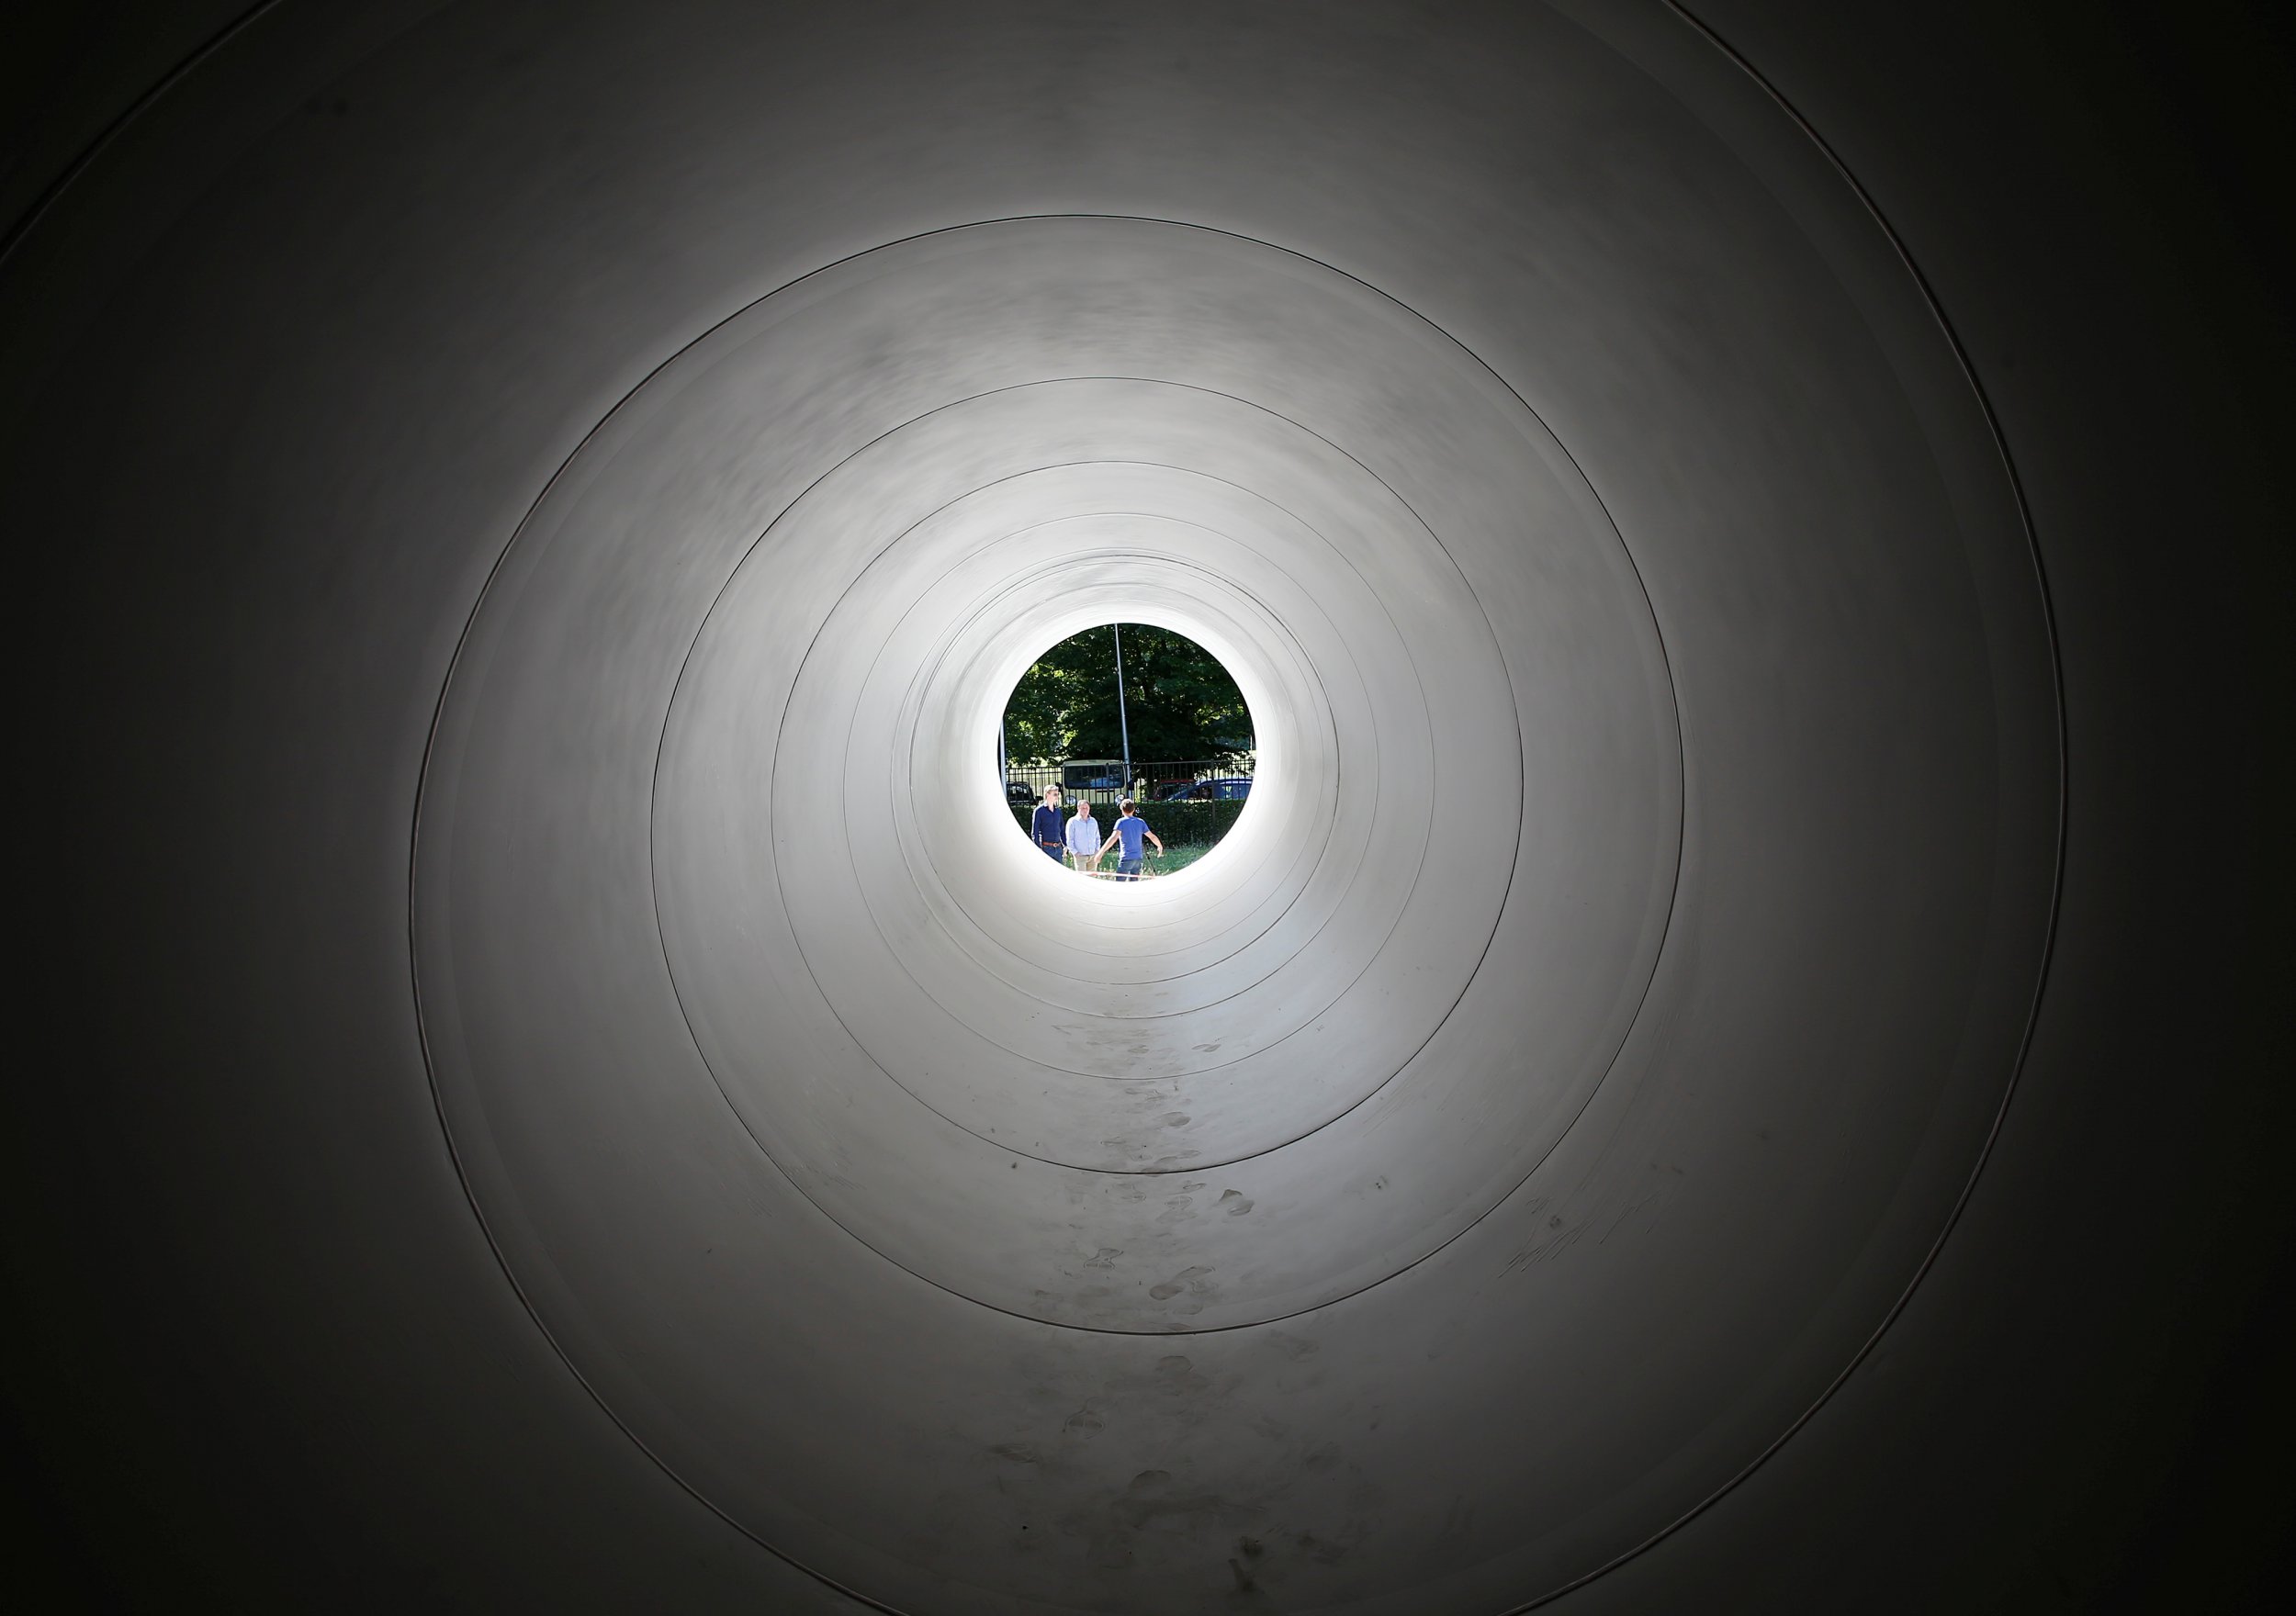 30-meter test tube for the hyperloop in delft, the Netherlands